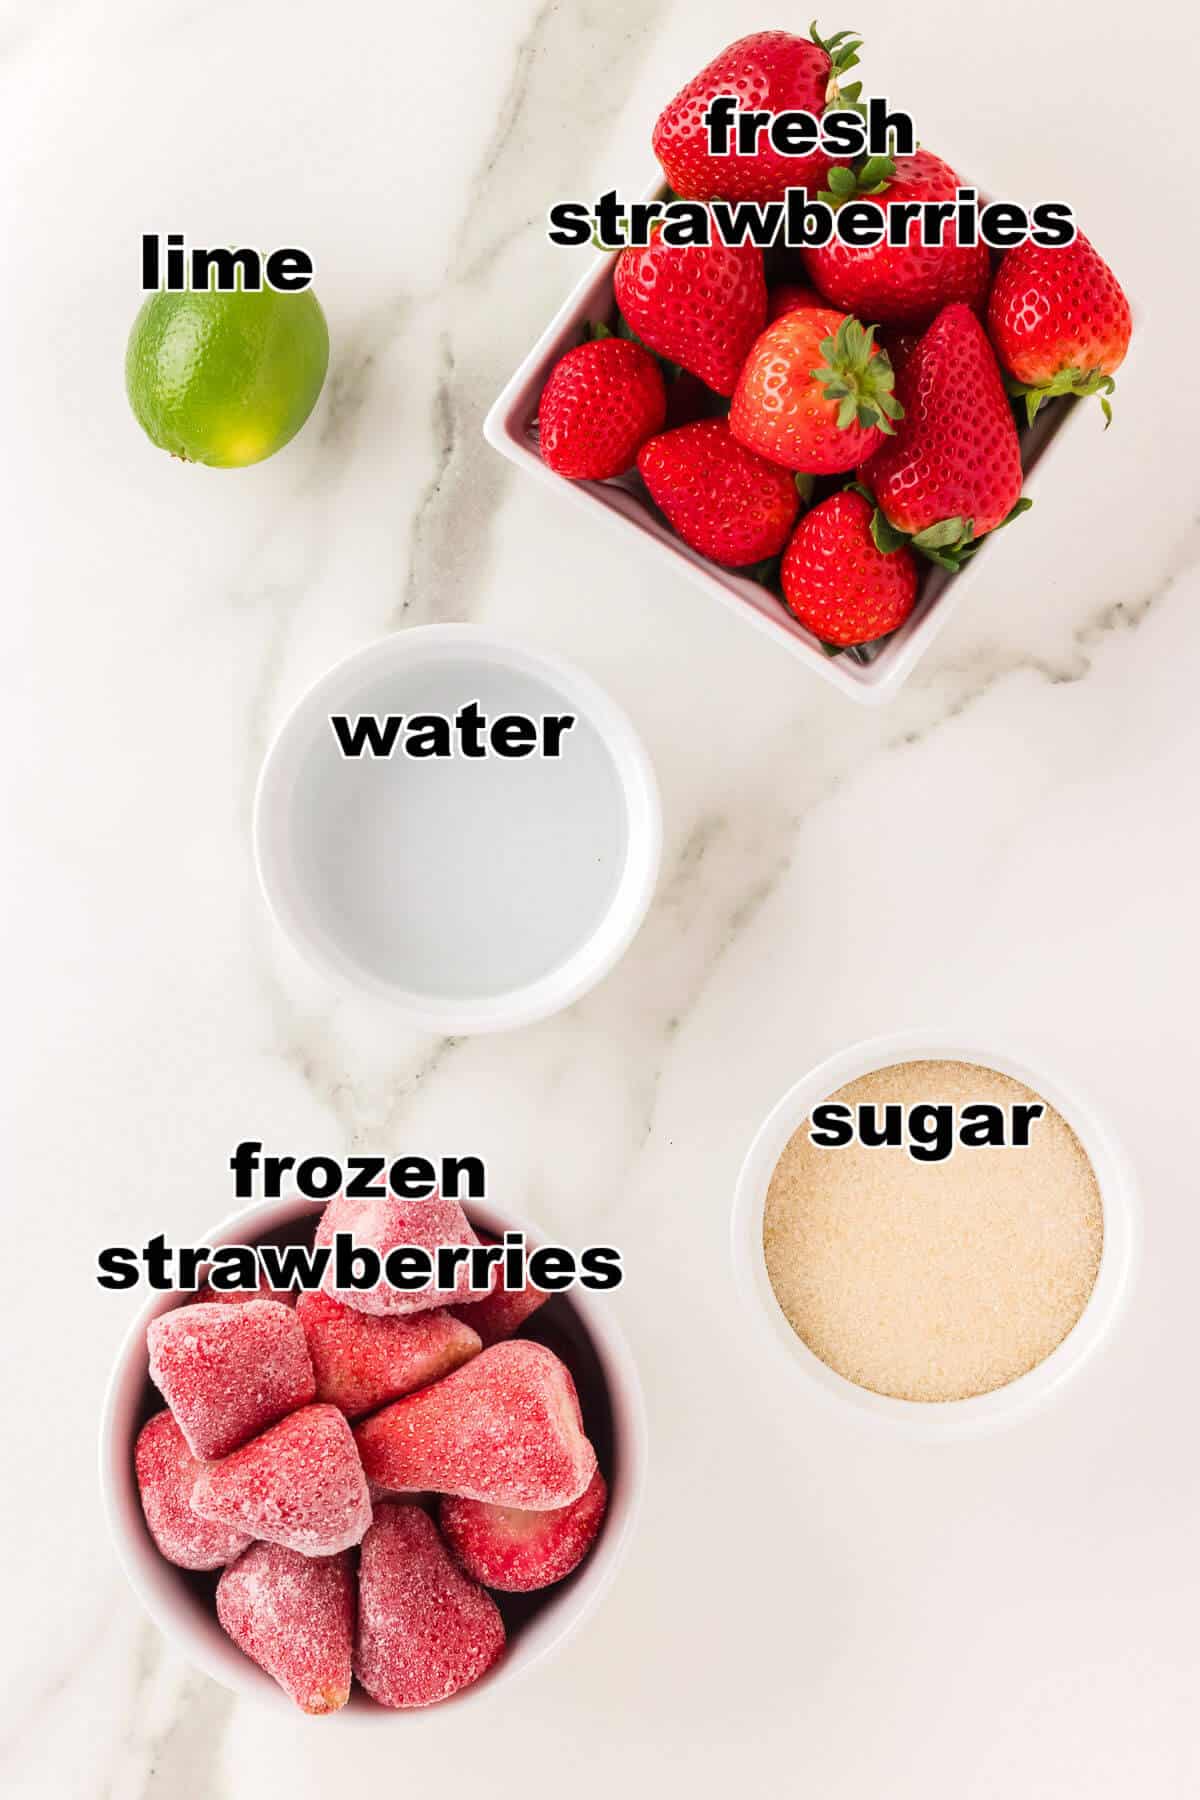 Ingredients to make a virgin strawberry daiquiri.